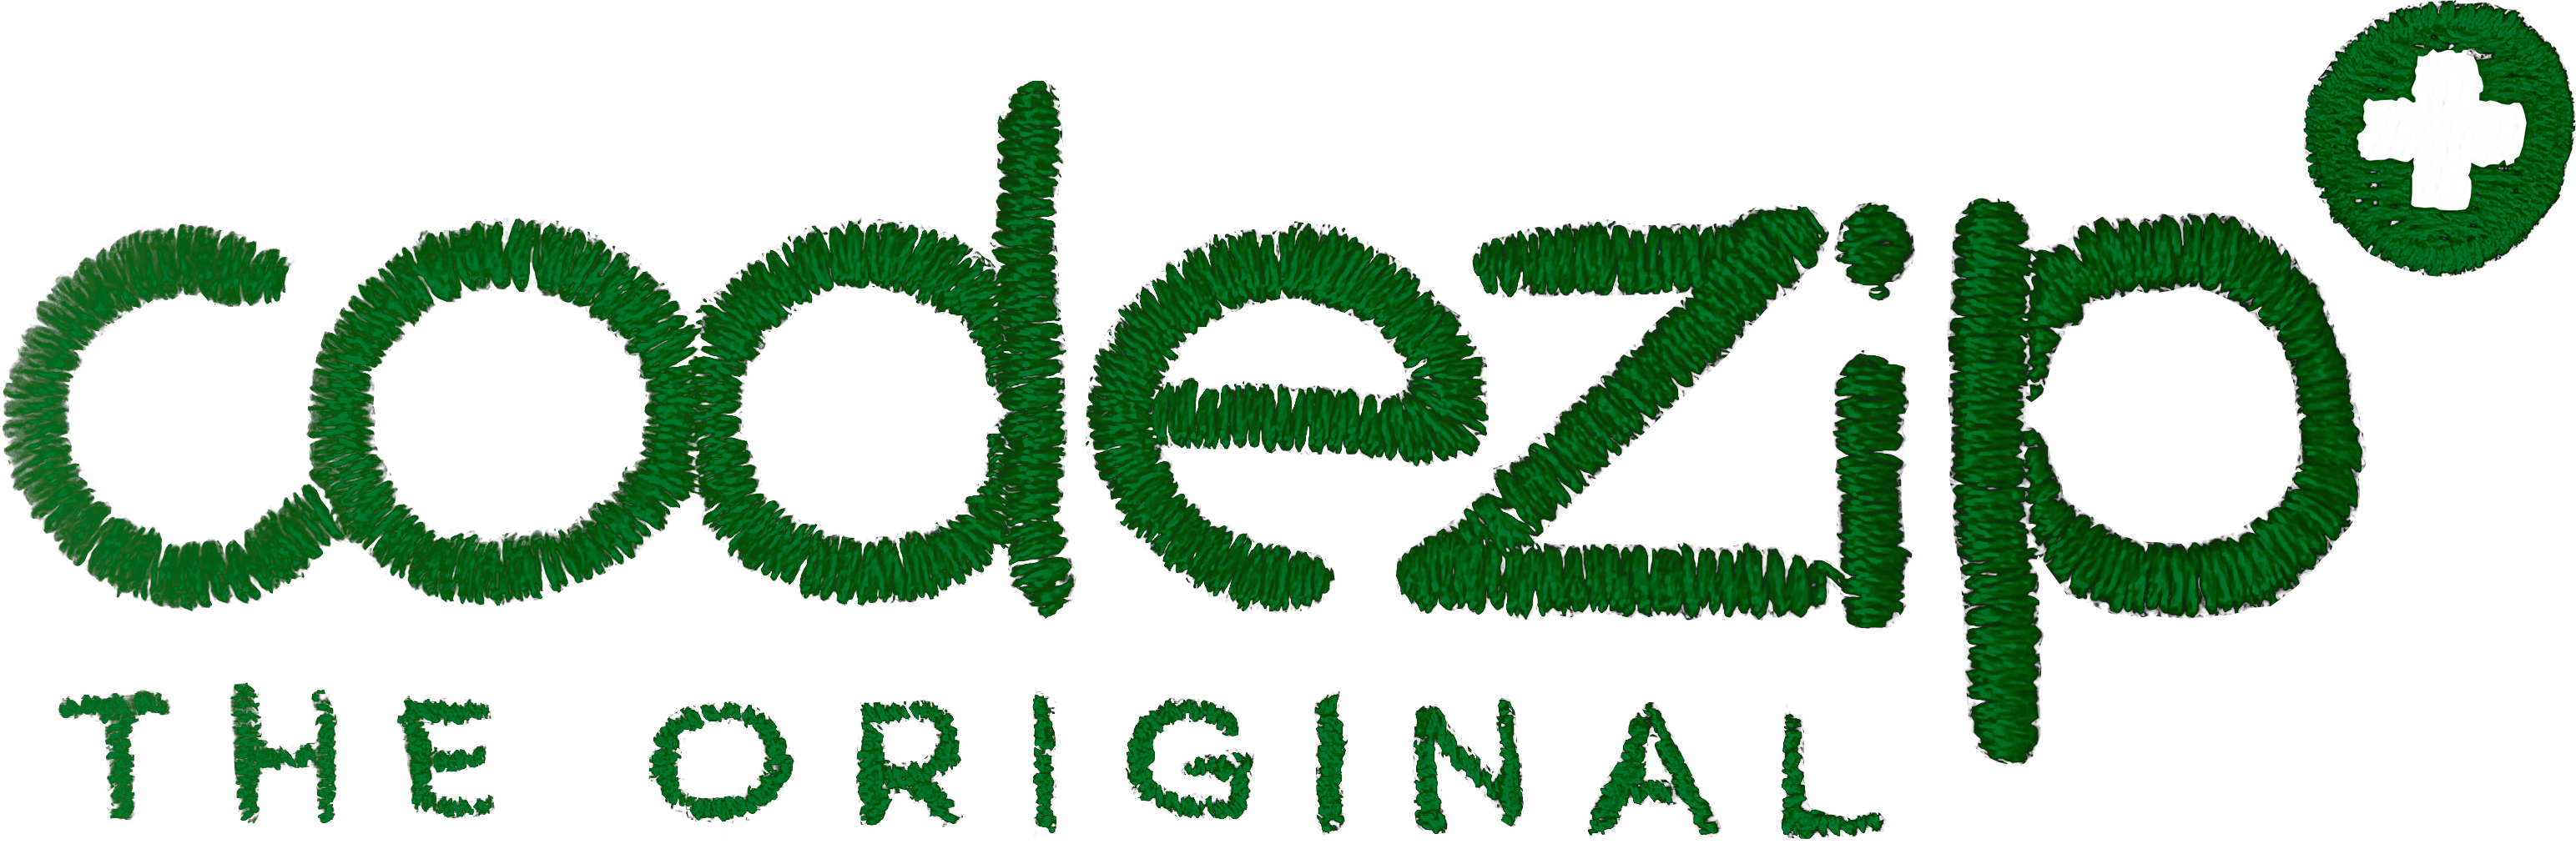 Logo vert forêt